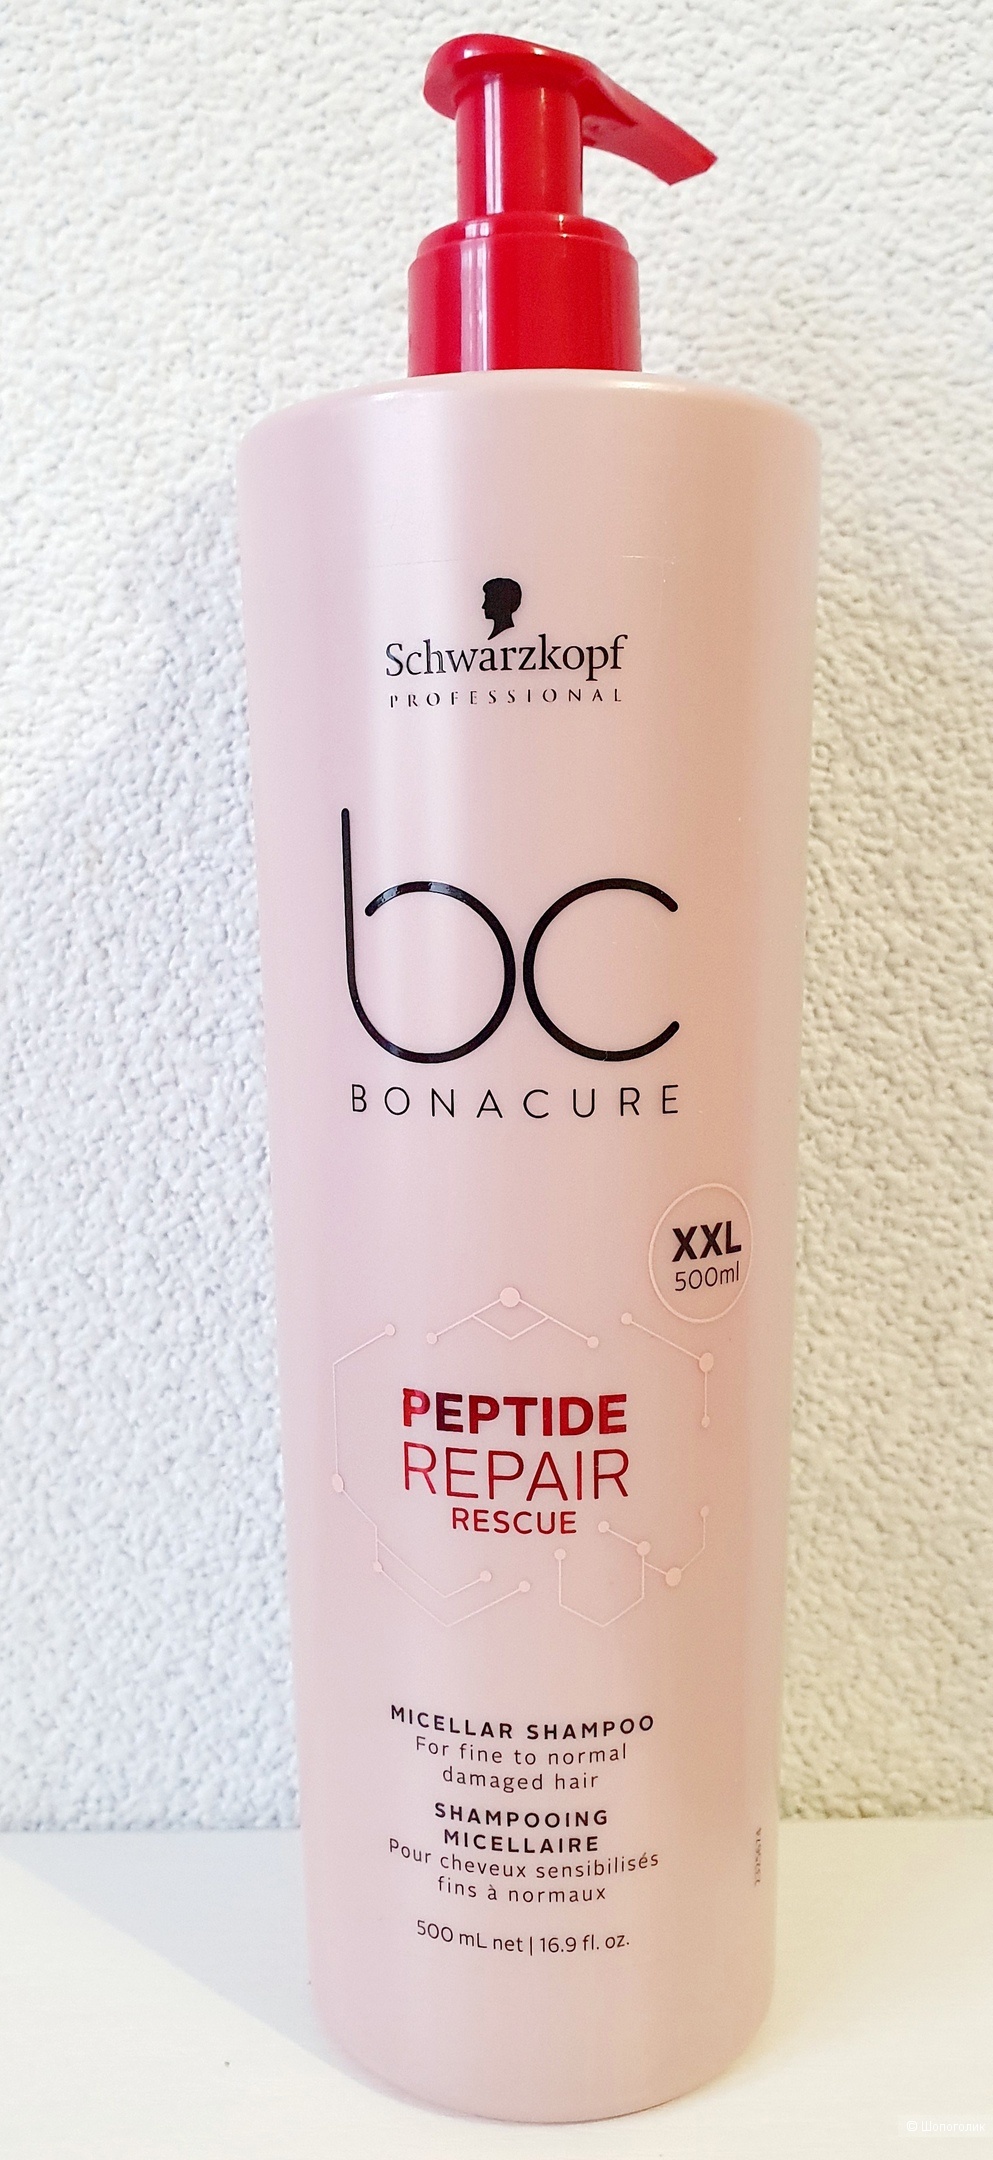 Schwarzkopf Professional шампунь bonacure peptide repair rescue для восстановления волос мицеллярный 500мл.